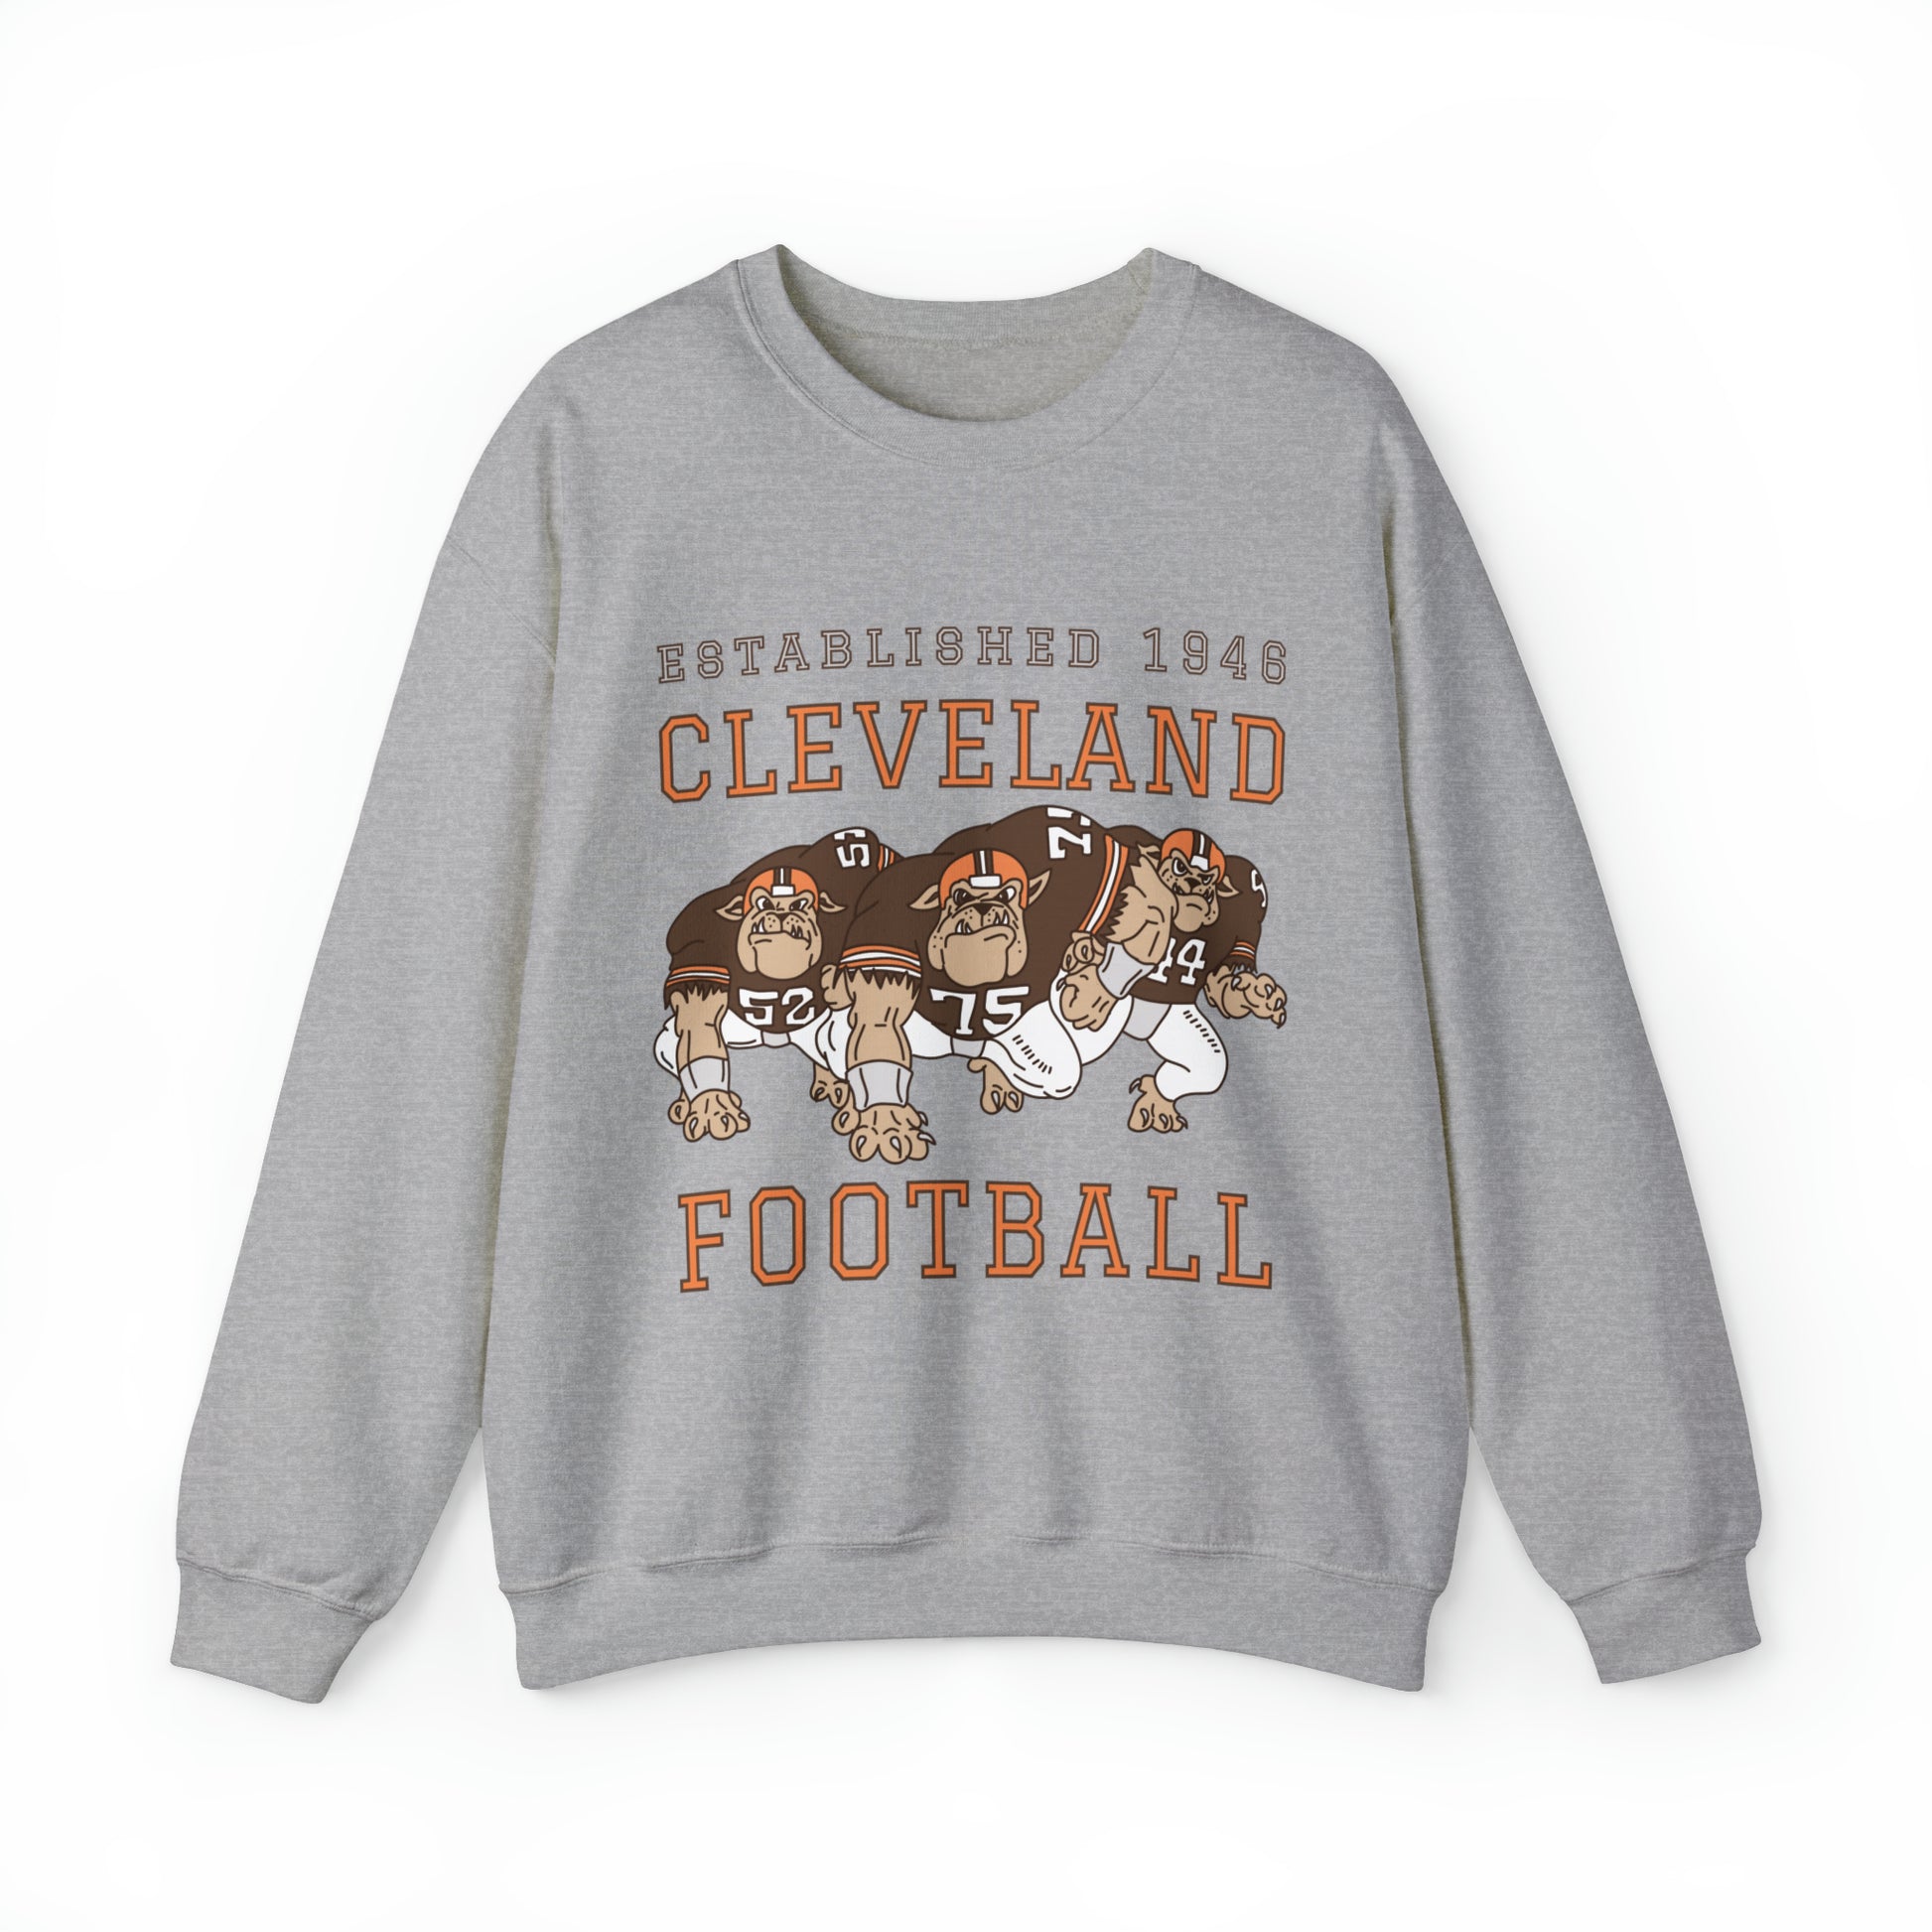 Vintage Cleveland Browns Crewneck - Browns Dawg Pound NFL Football Apparel - Men's & Women's Sweatshirt